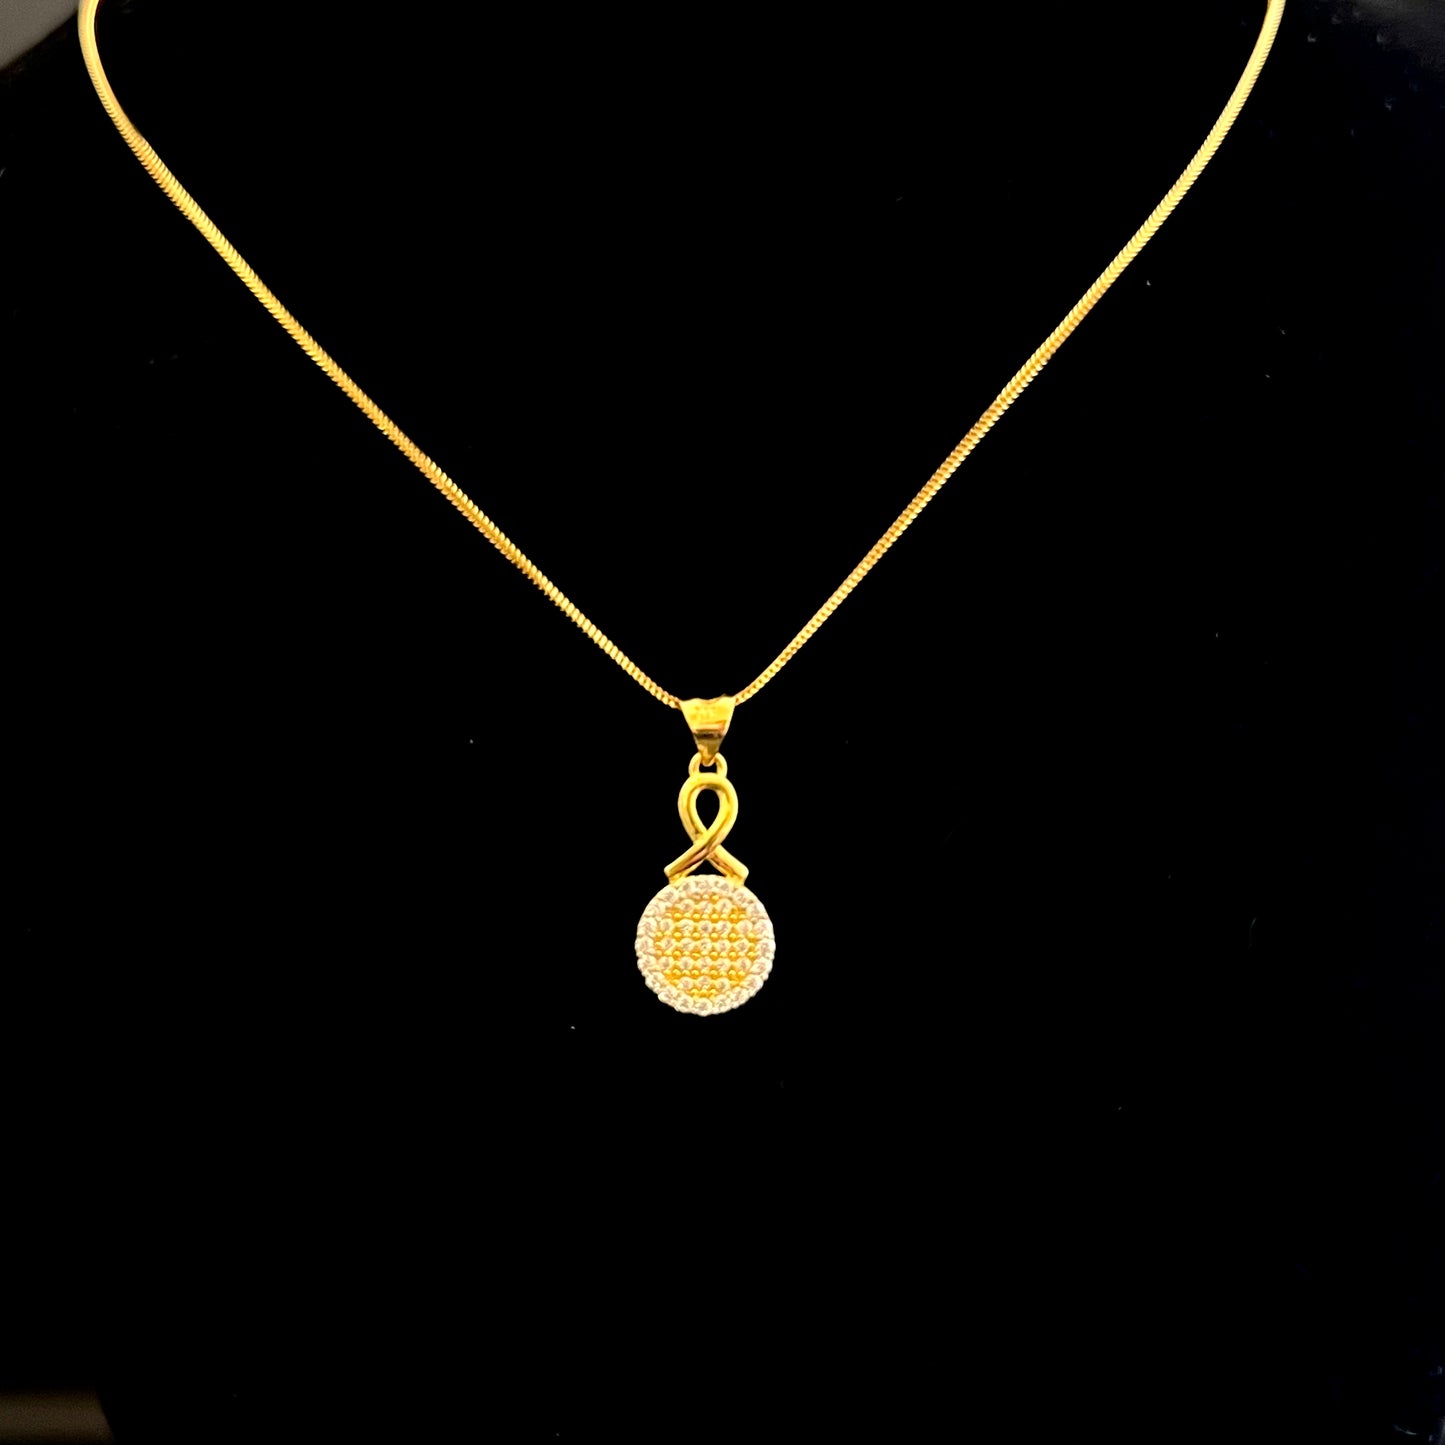 Circular Gold Pendant with Glistening CZ Stones